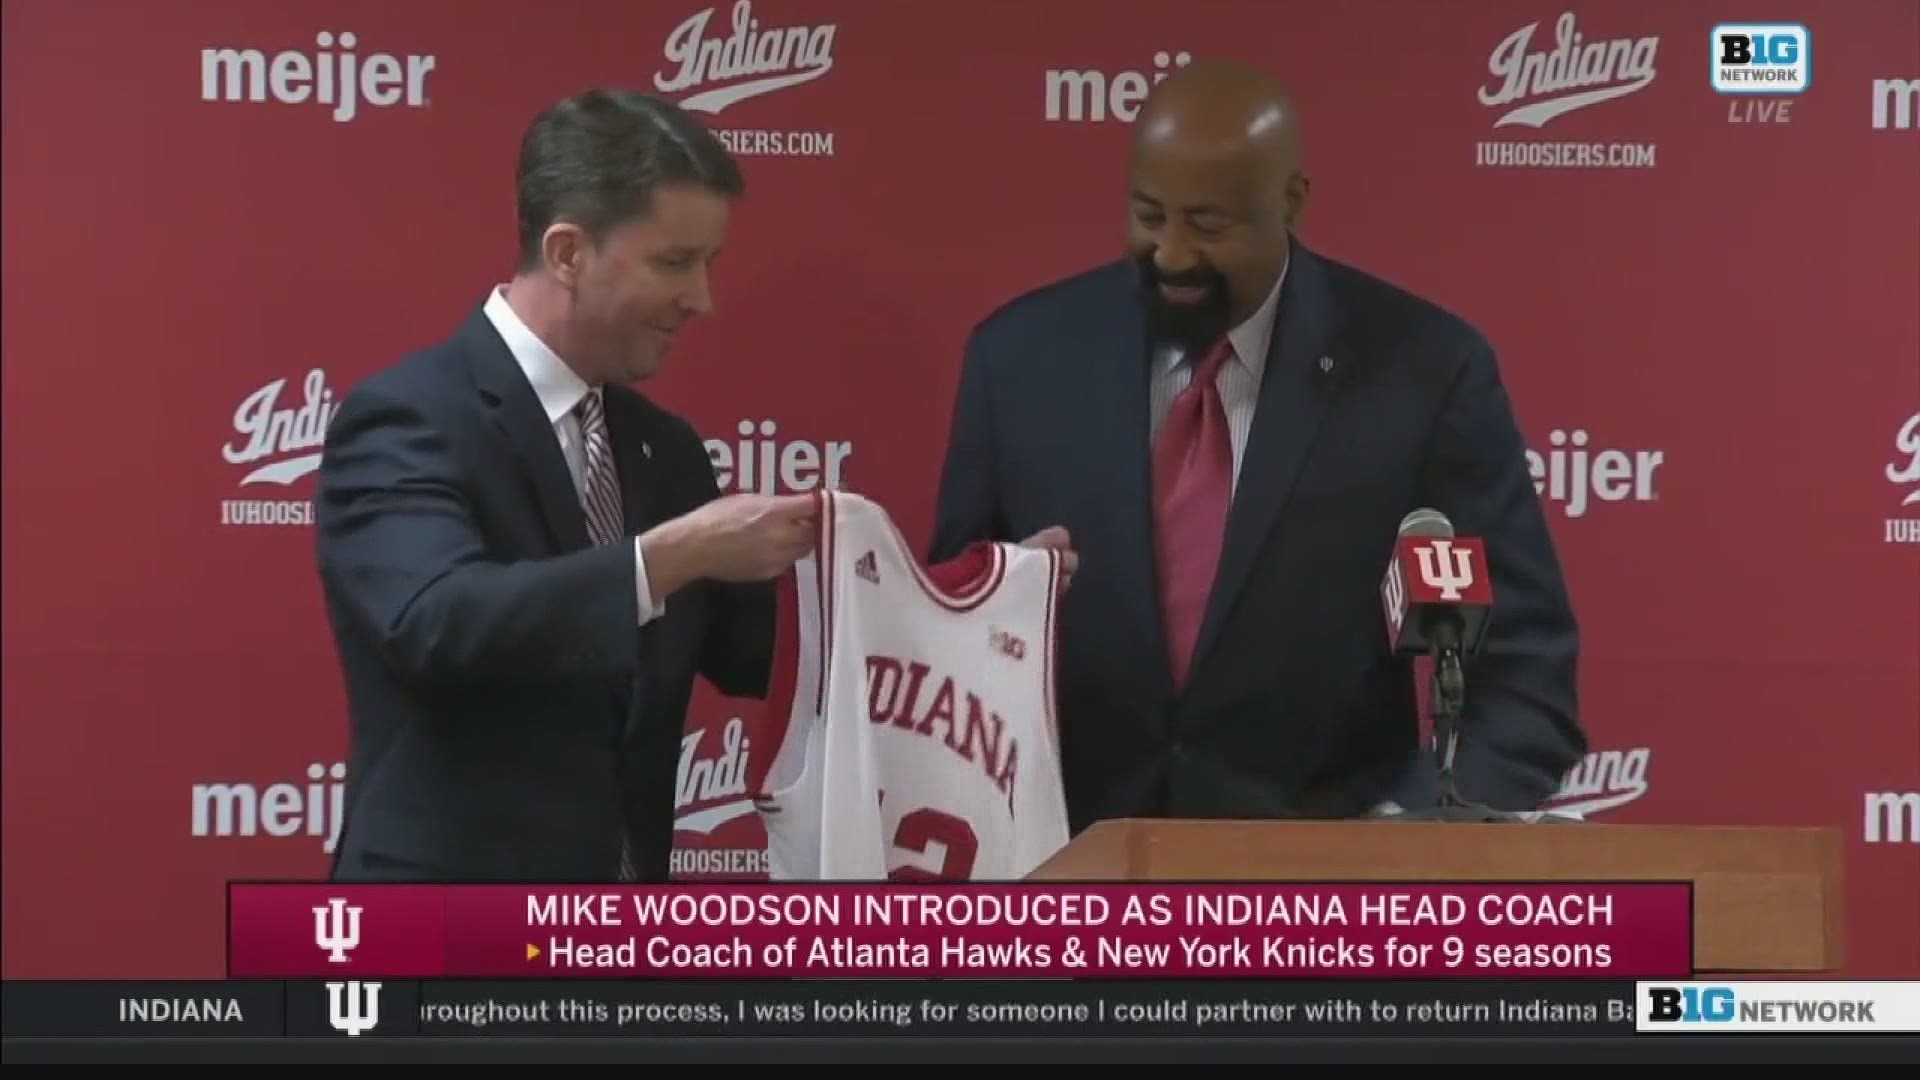 Woodson honed his basketball skills at Broad Ripple High School